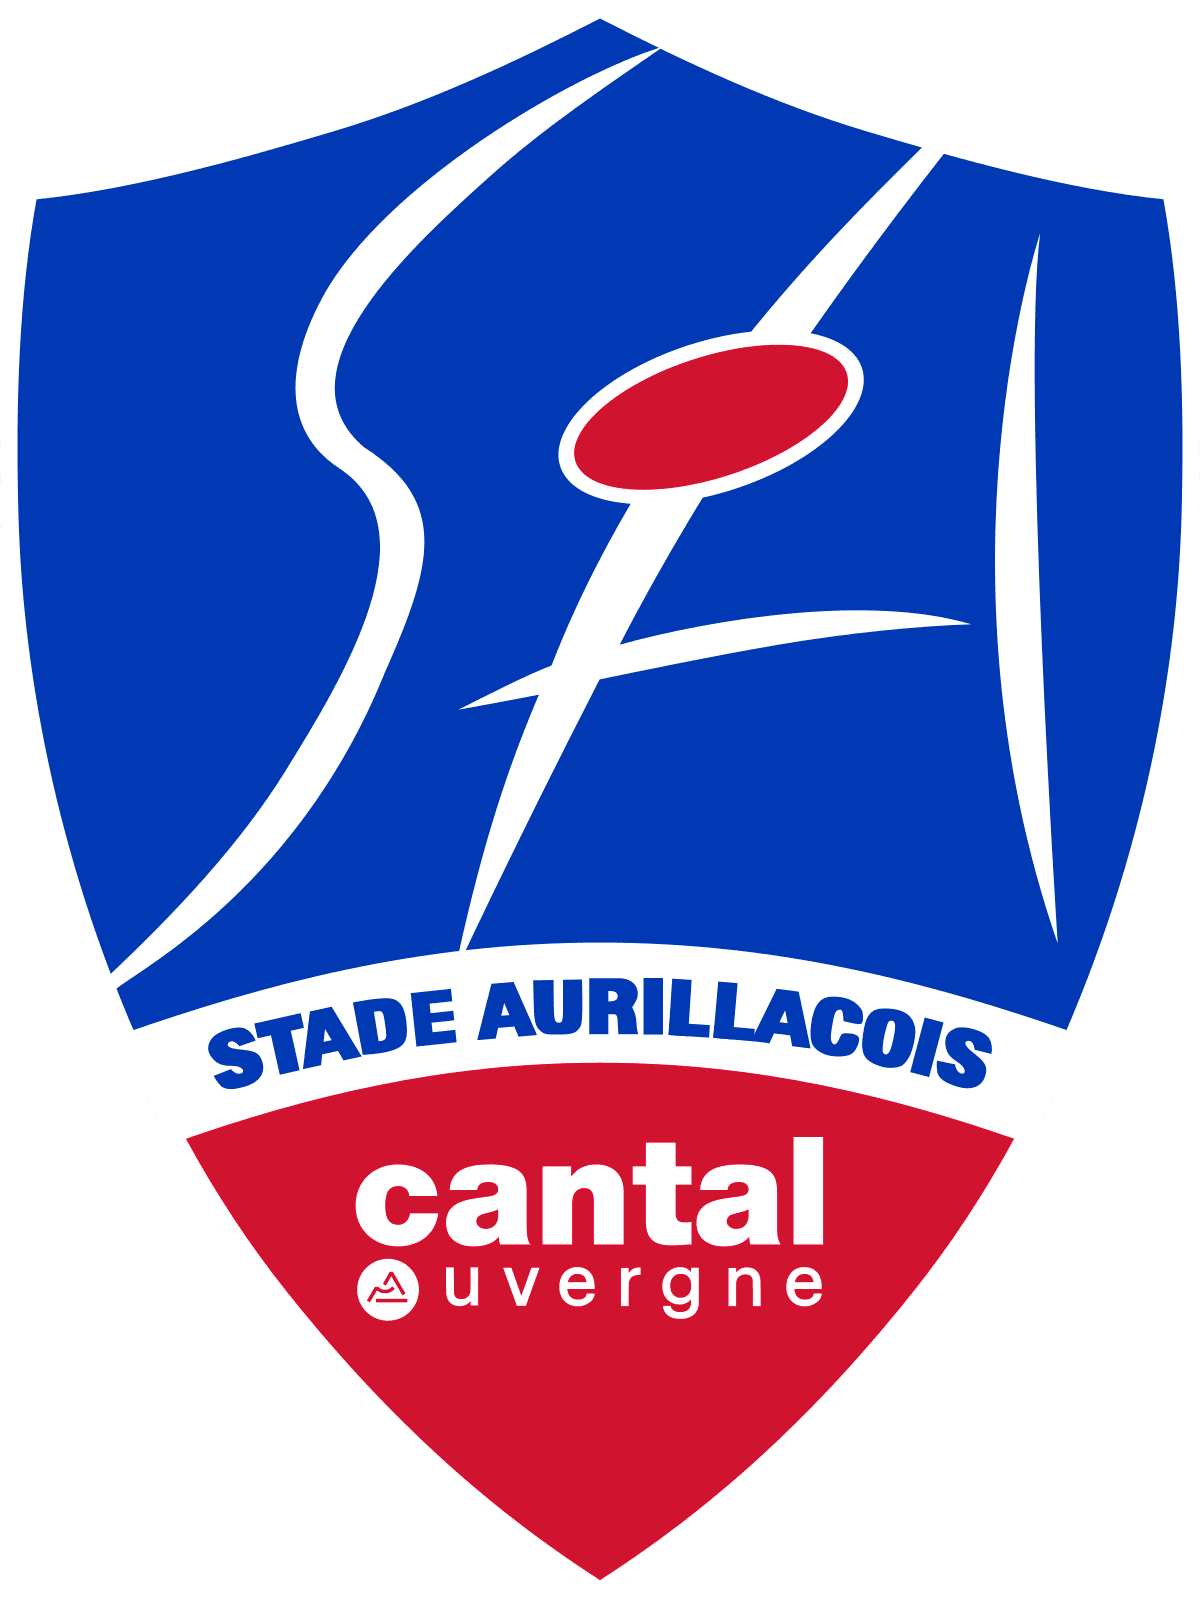 1200px-Logo_Stade_aurillacois_Cantal_Auvergne_2018.svg